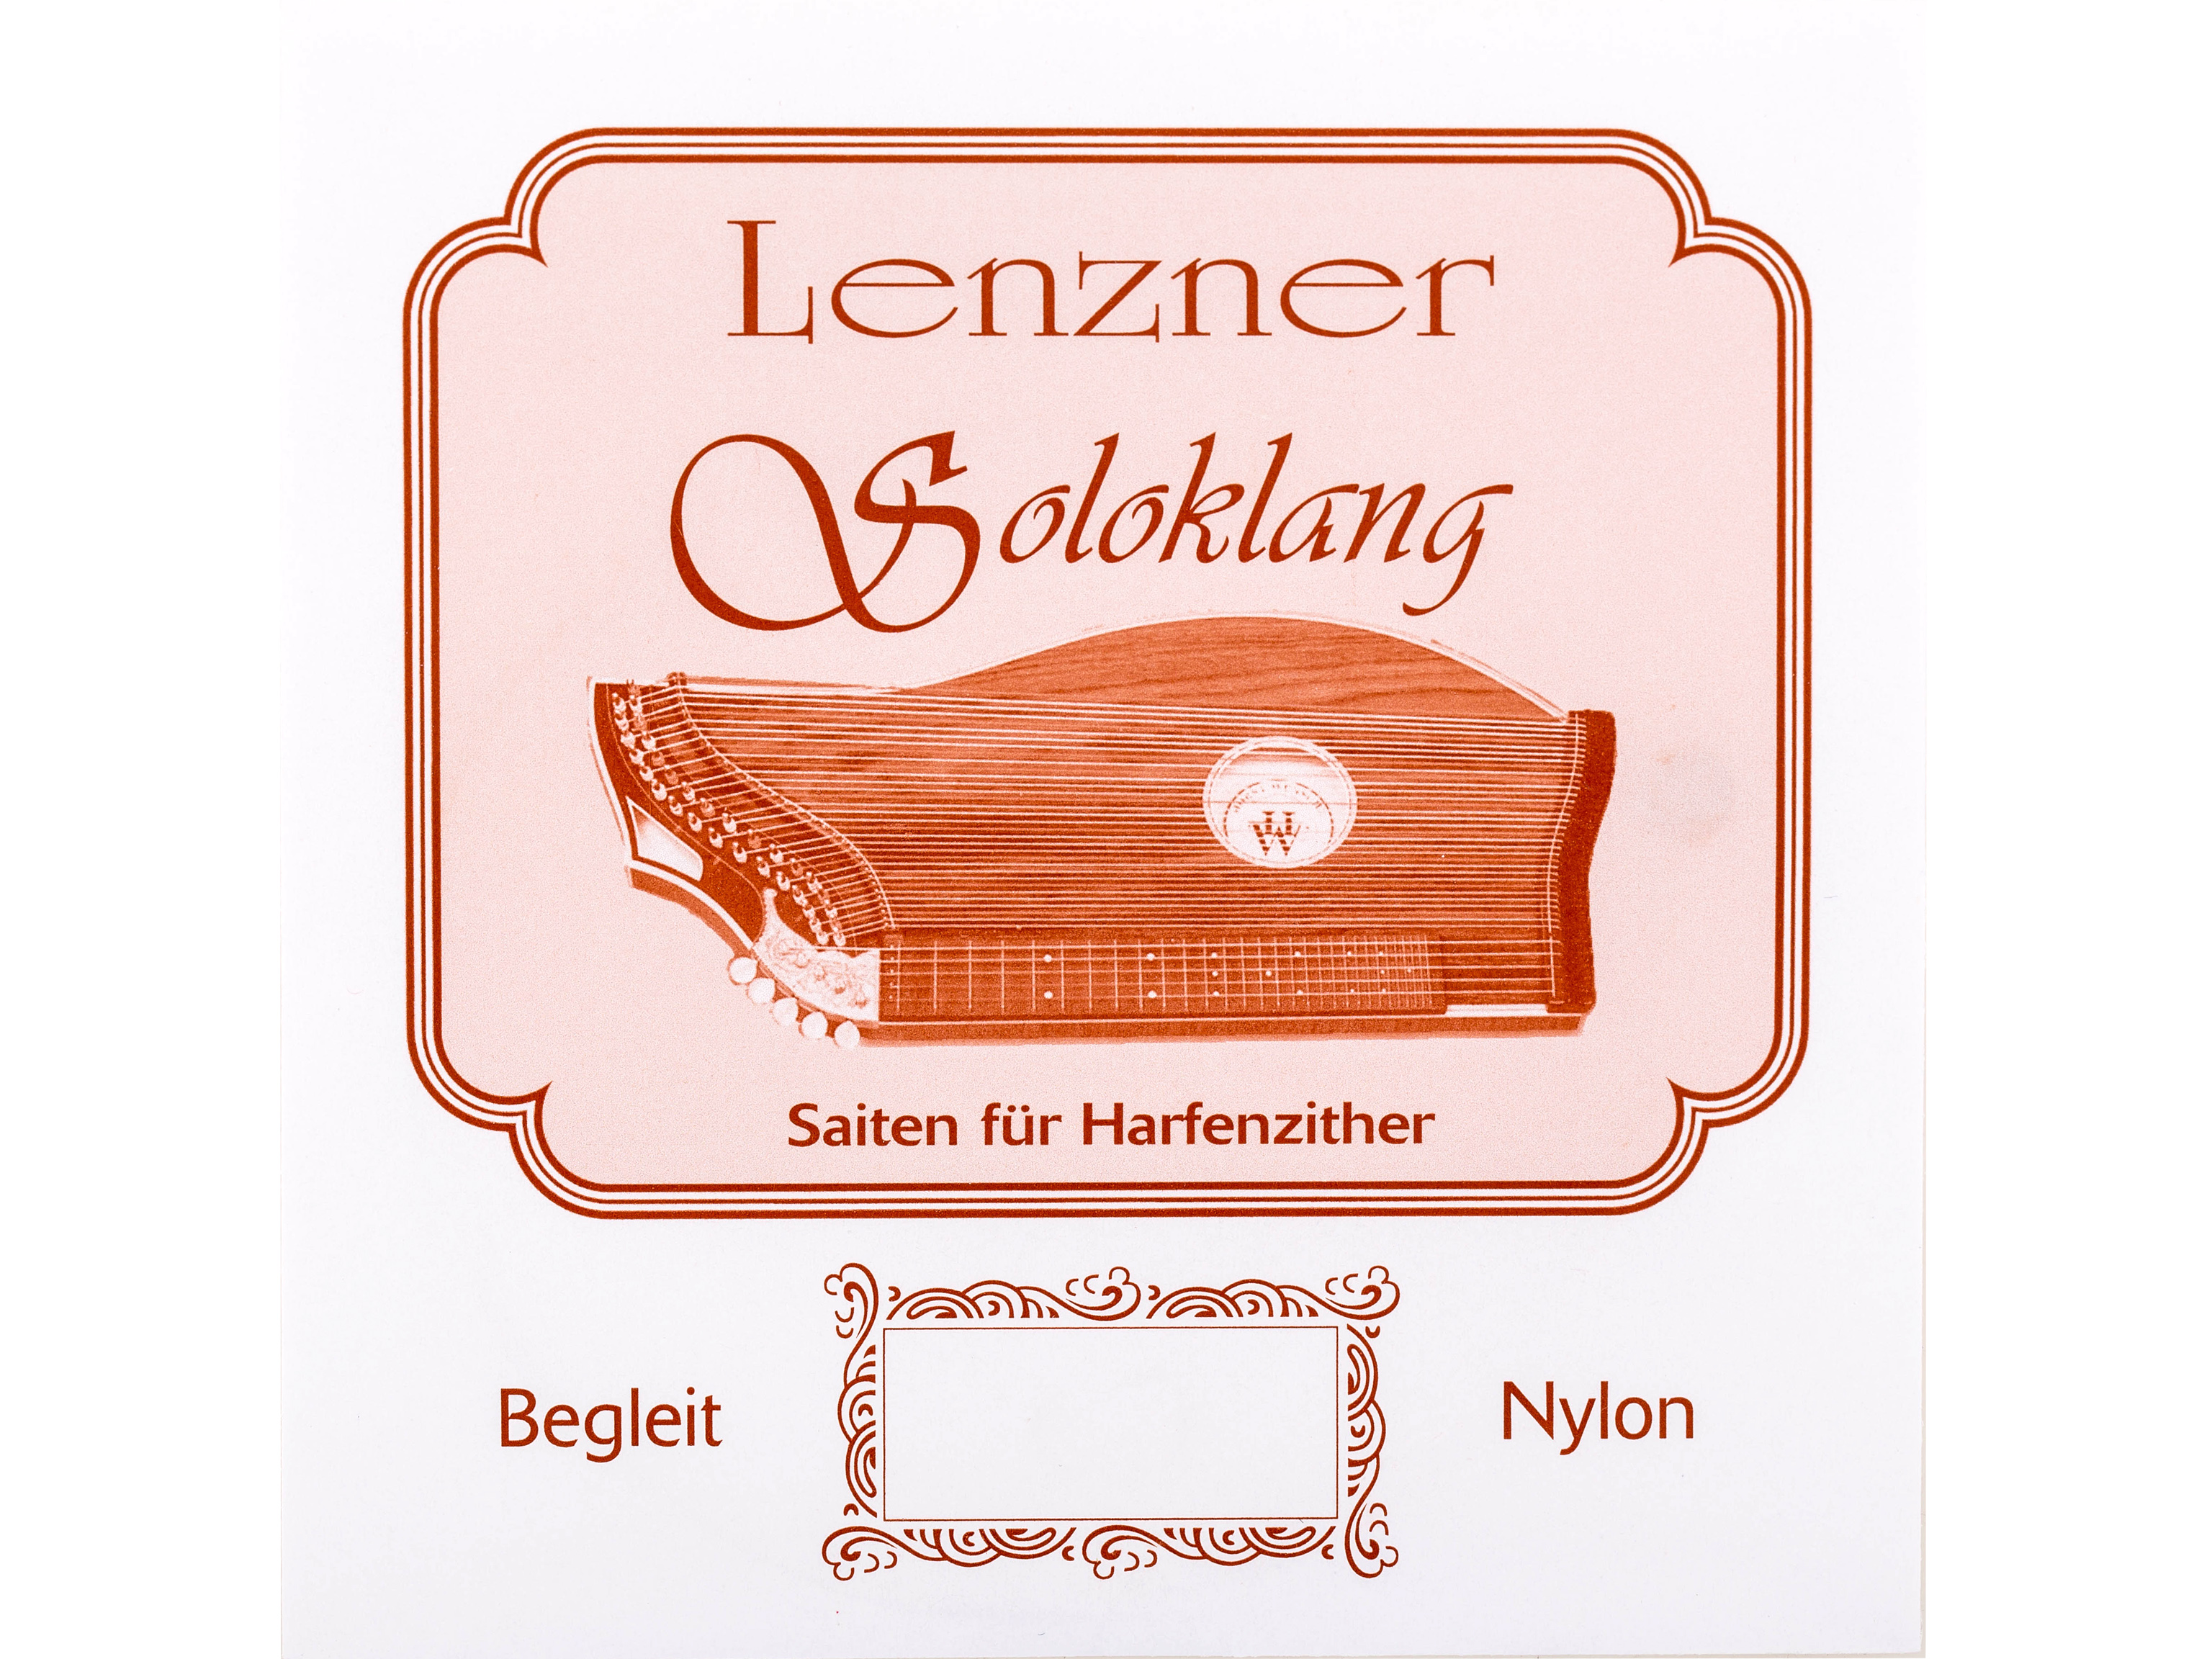 Lenzner 3. f Zithersaite Soloklang Begleit